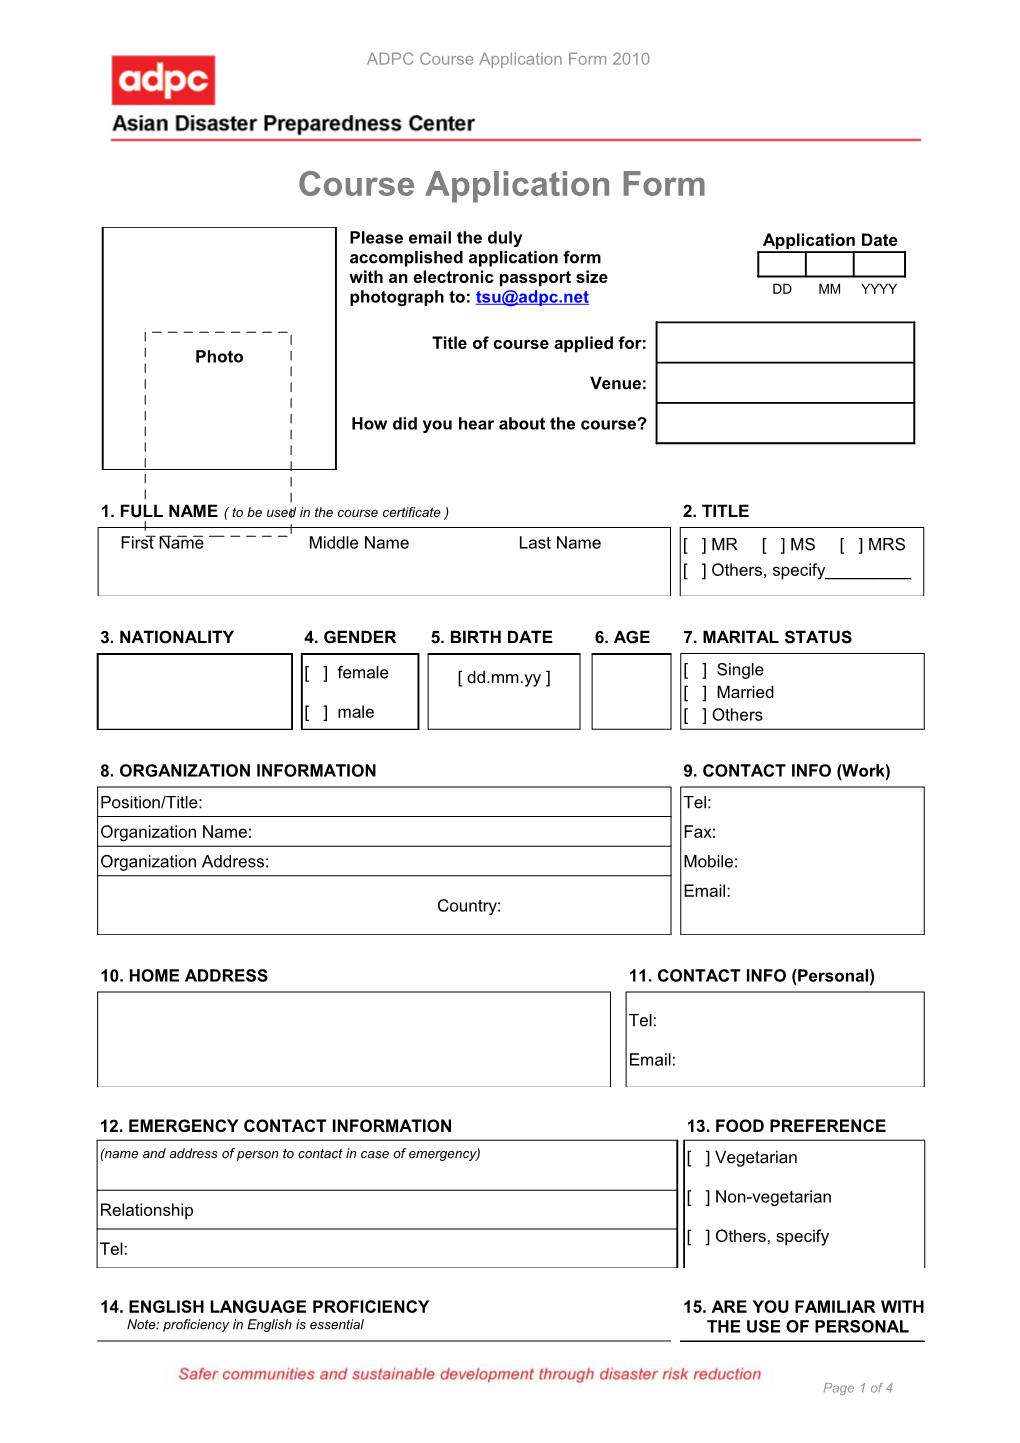 ADPC Course Application Form 2010